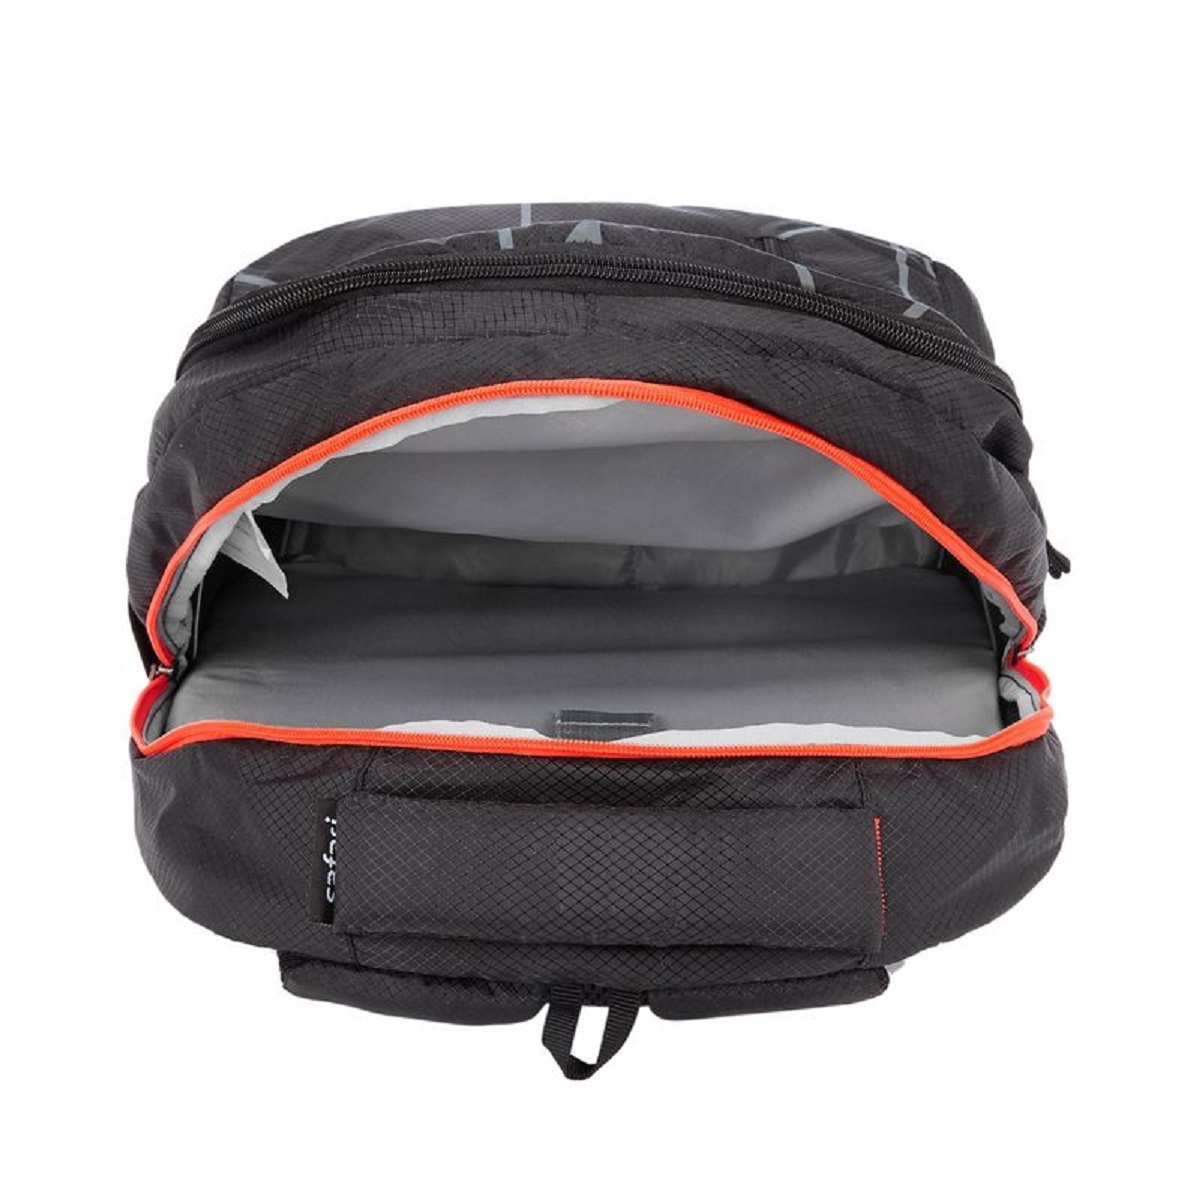 Safari Backpack Prisma 19Inch Black